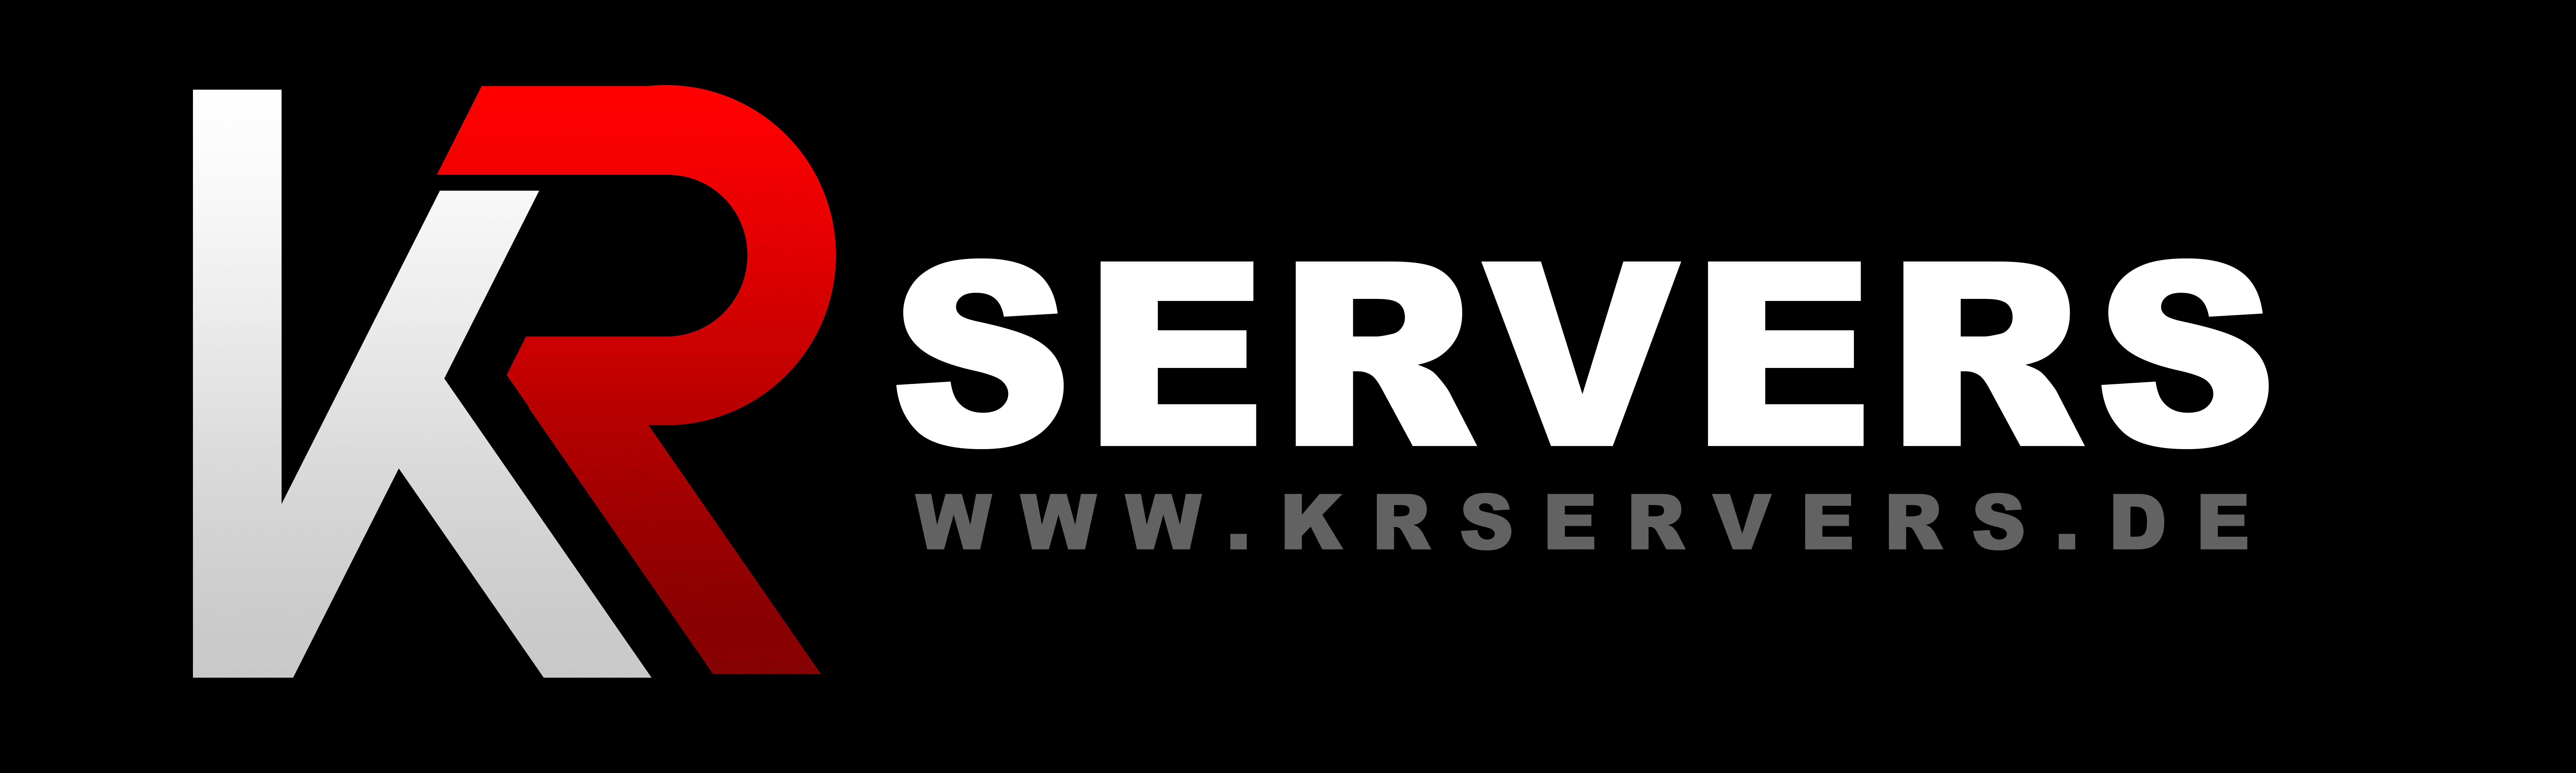 KR Servers